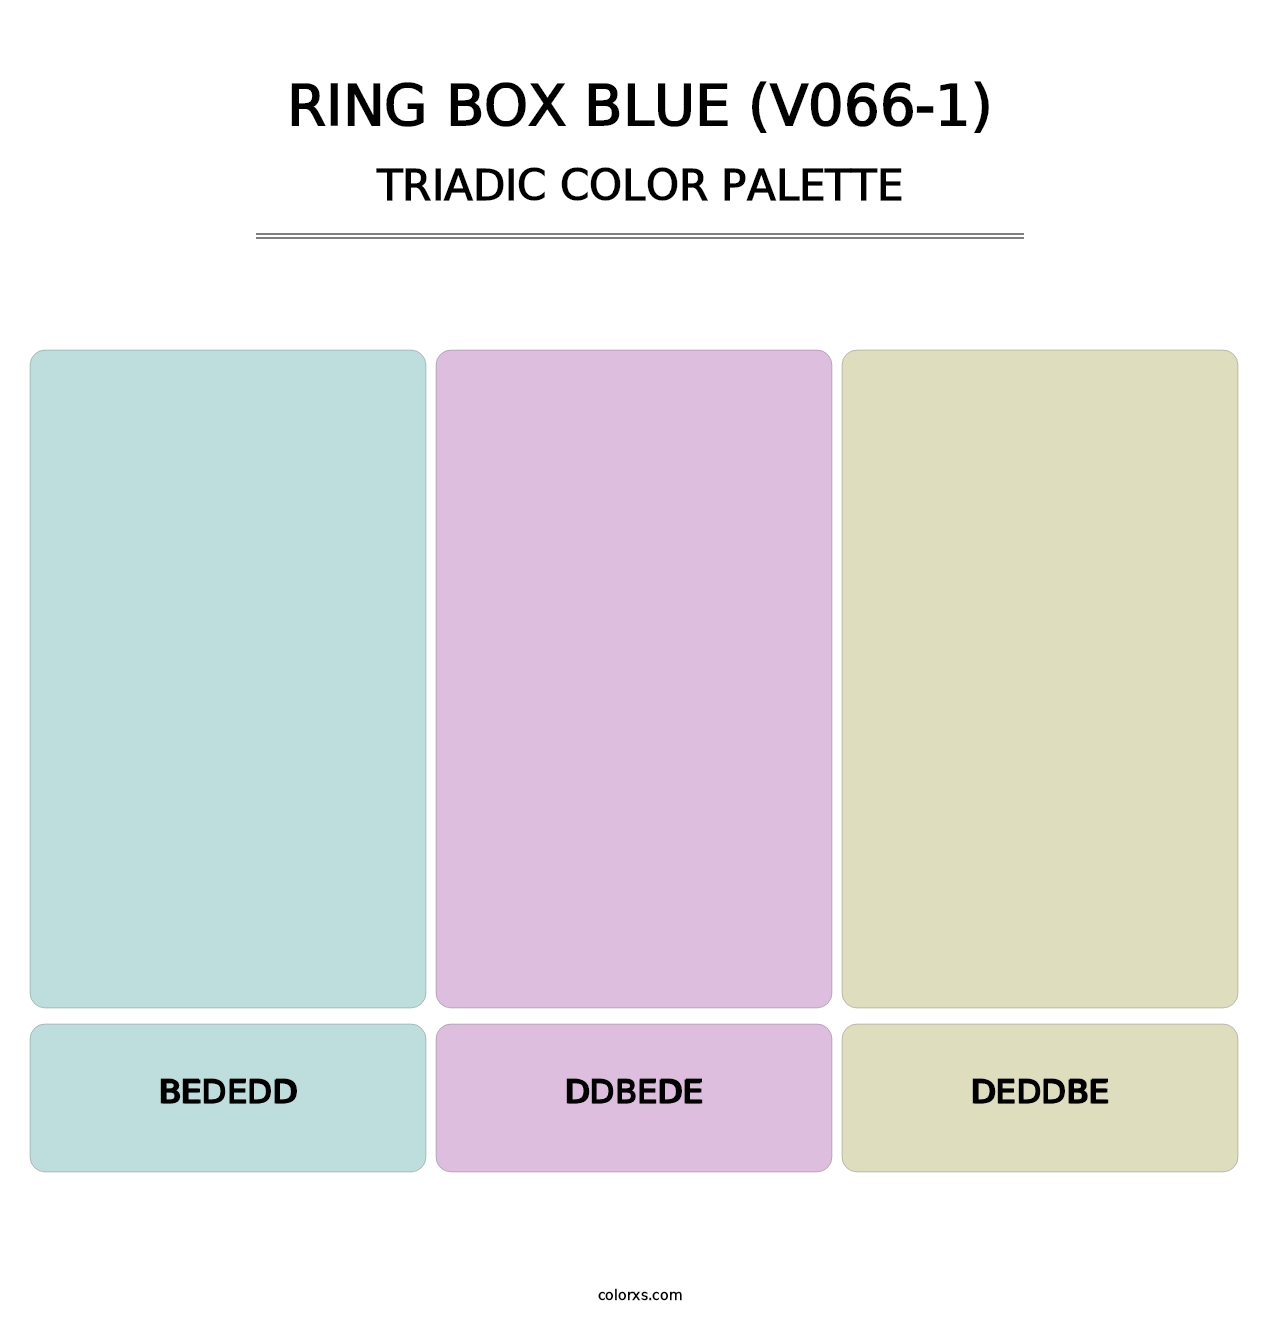 Ring Box Blue (V066-1) - Triadic Color Palette